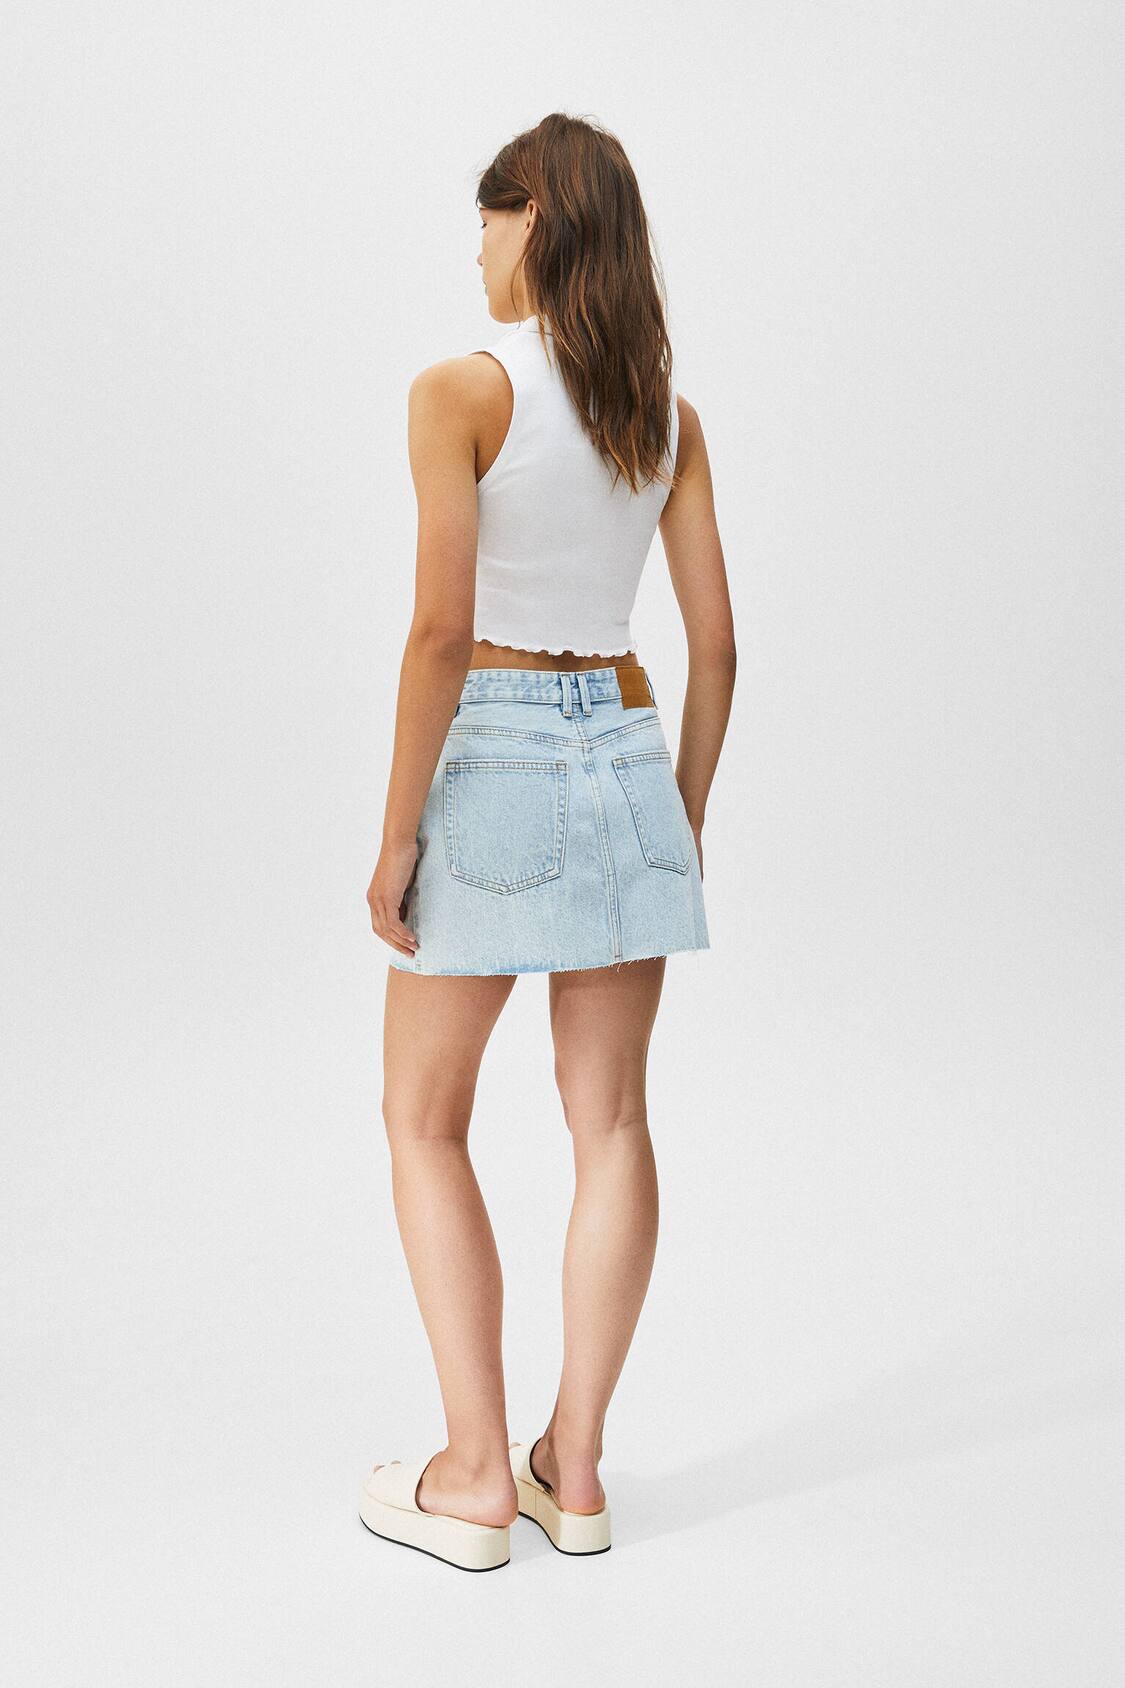 Pinstripe Leather Zip-Up Mini Skirt - Women - Ready-to-Wear